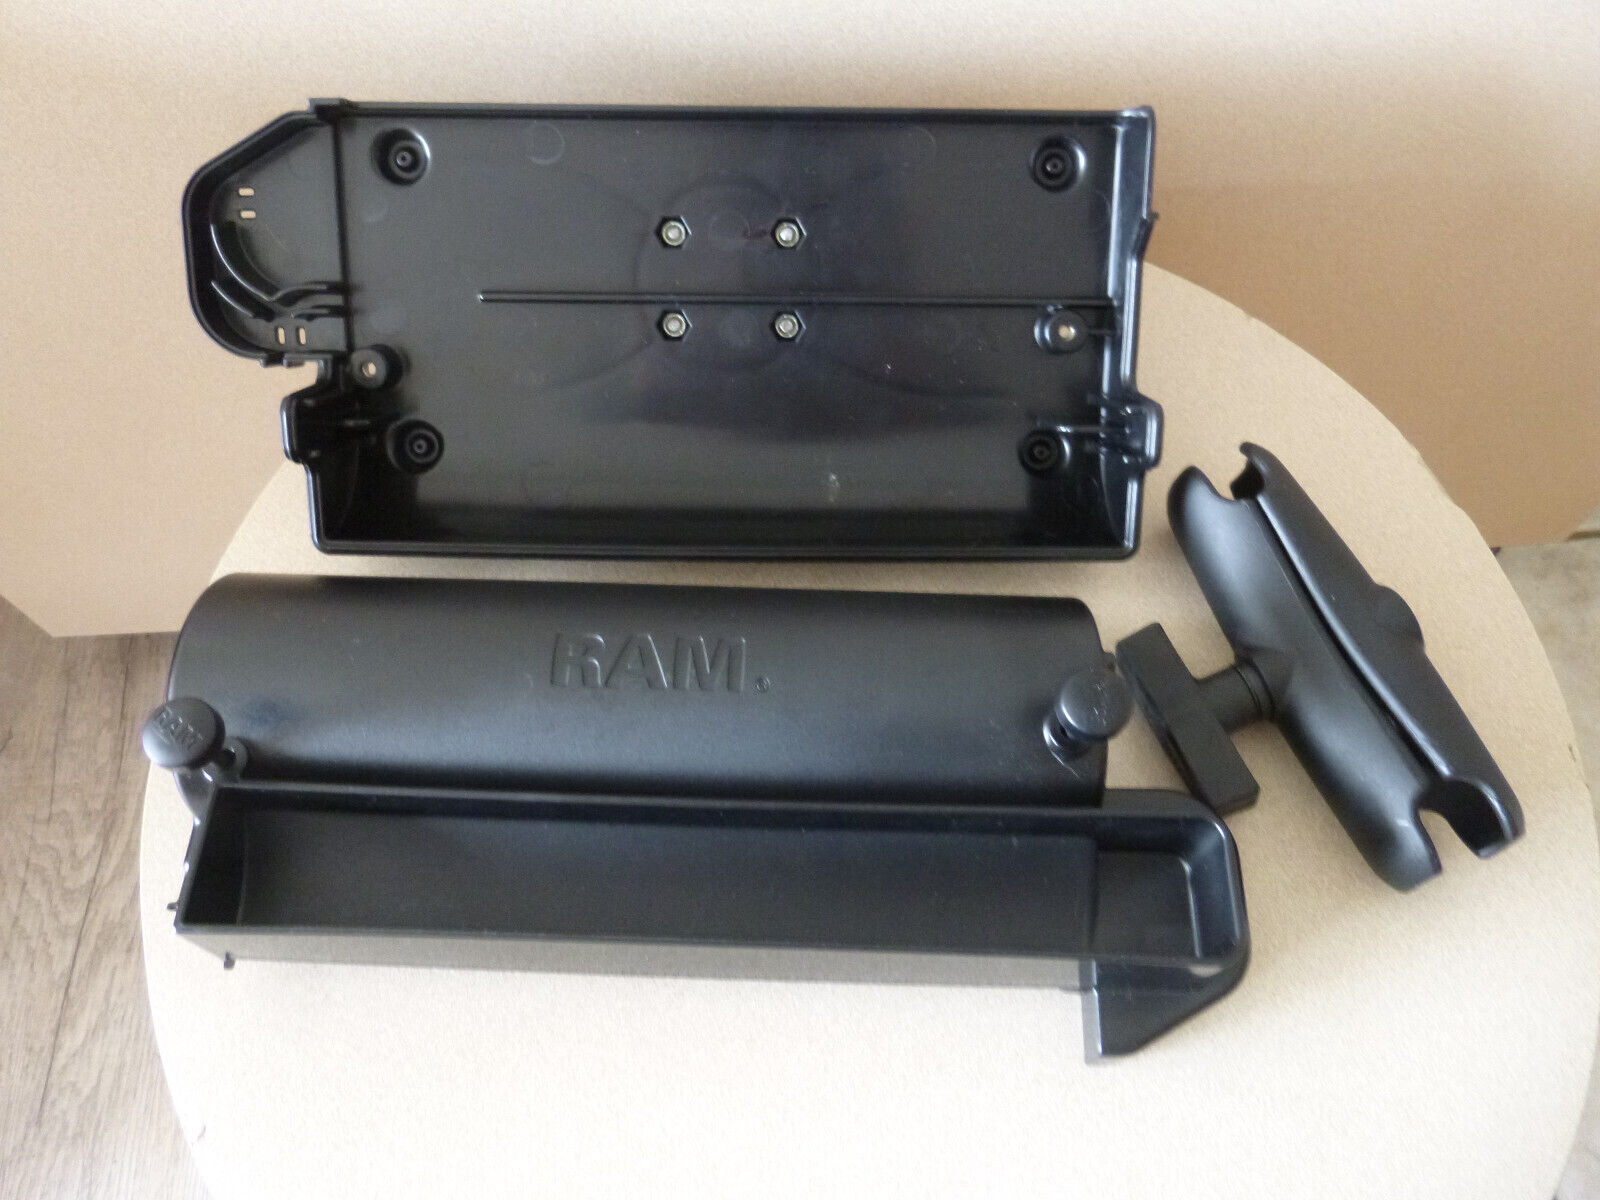 Ram RPR-VPR-101C Vehicle Mount Holder For PocketJet Series Printer